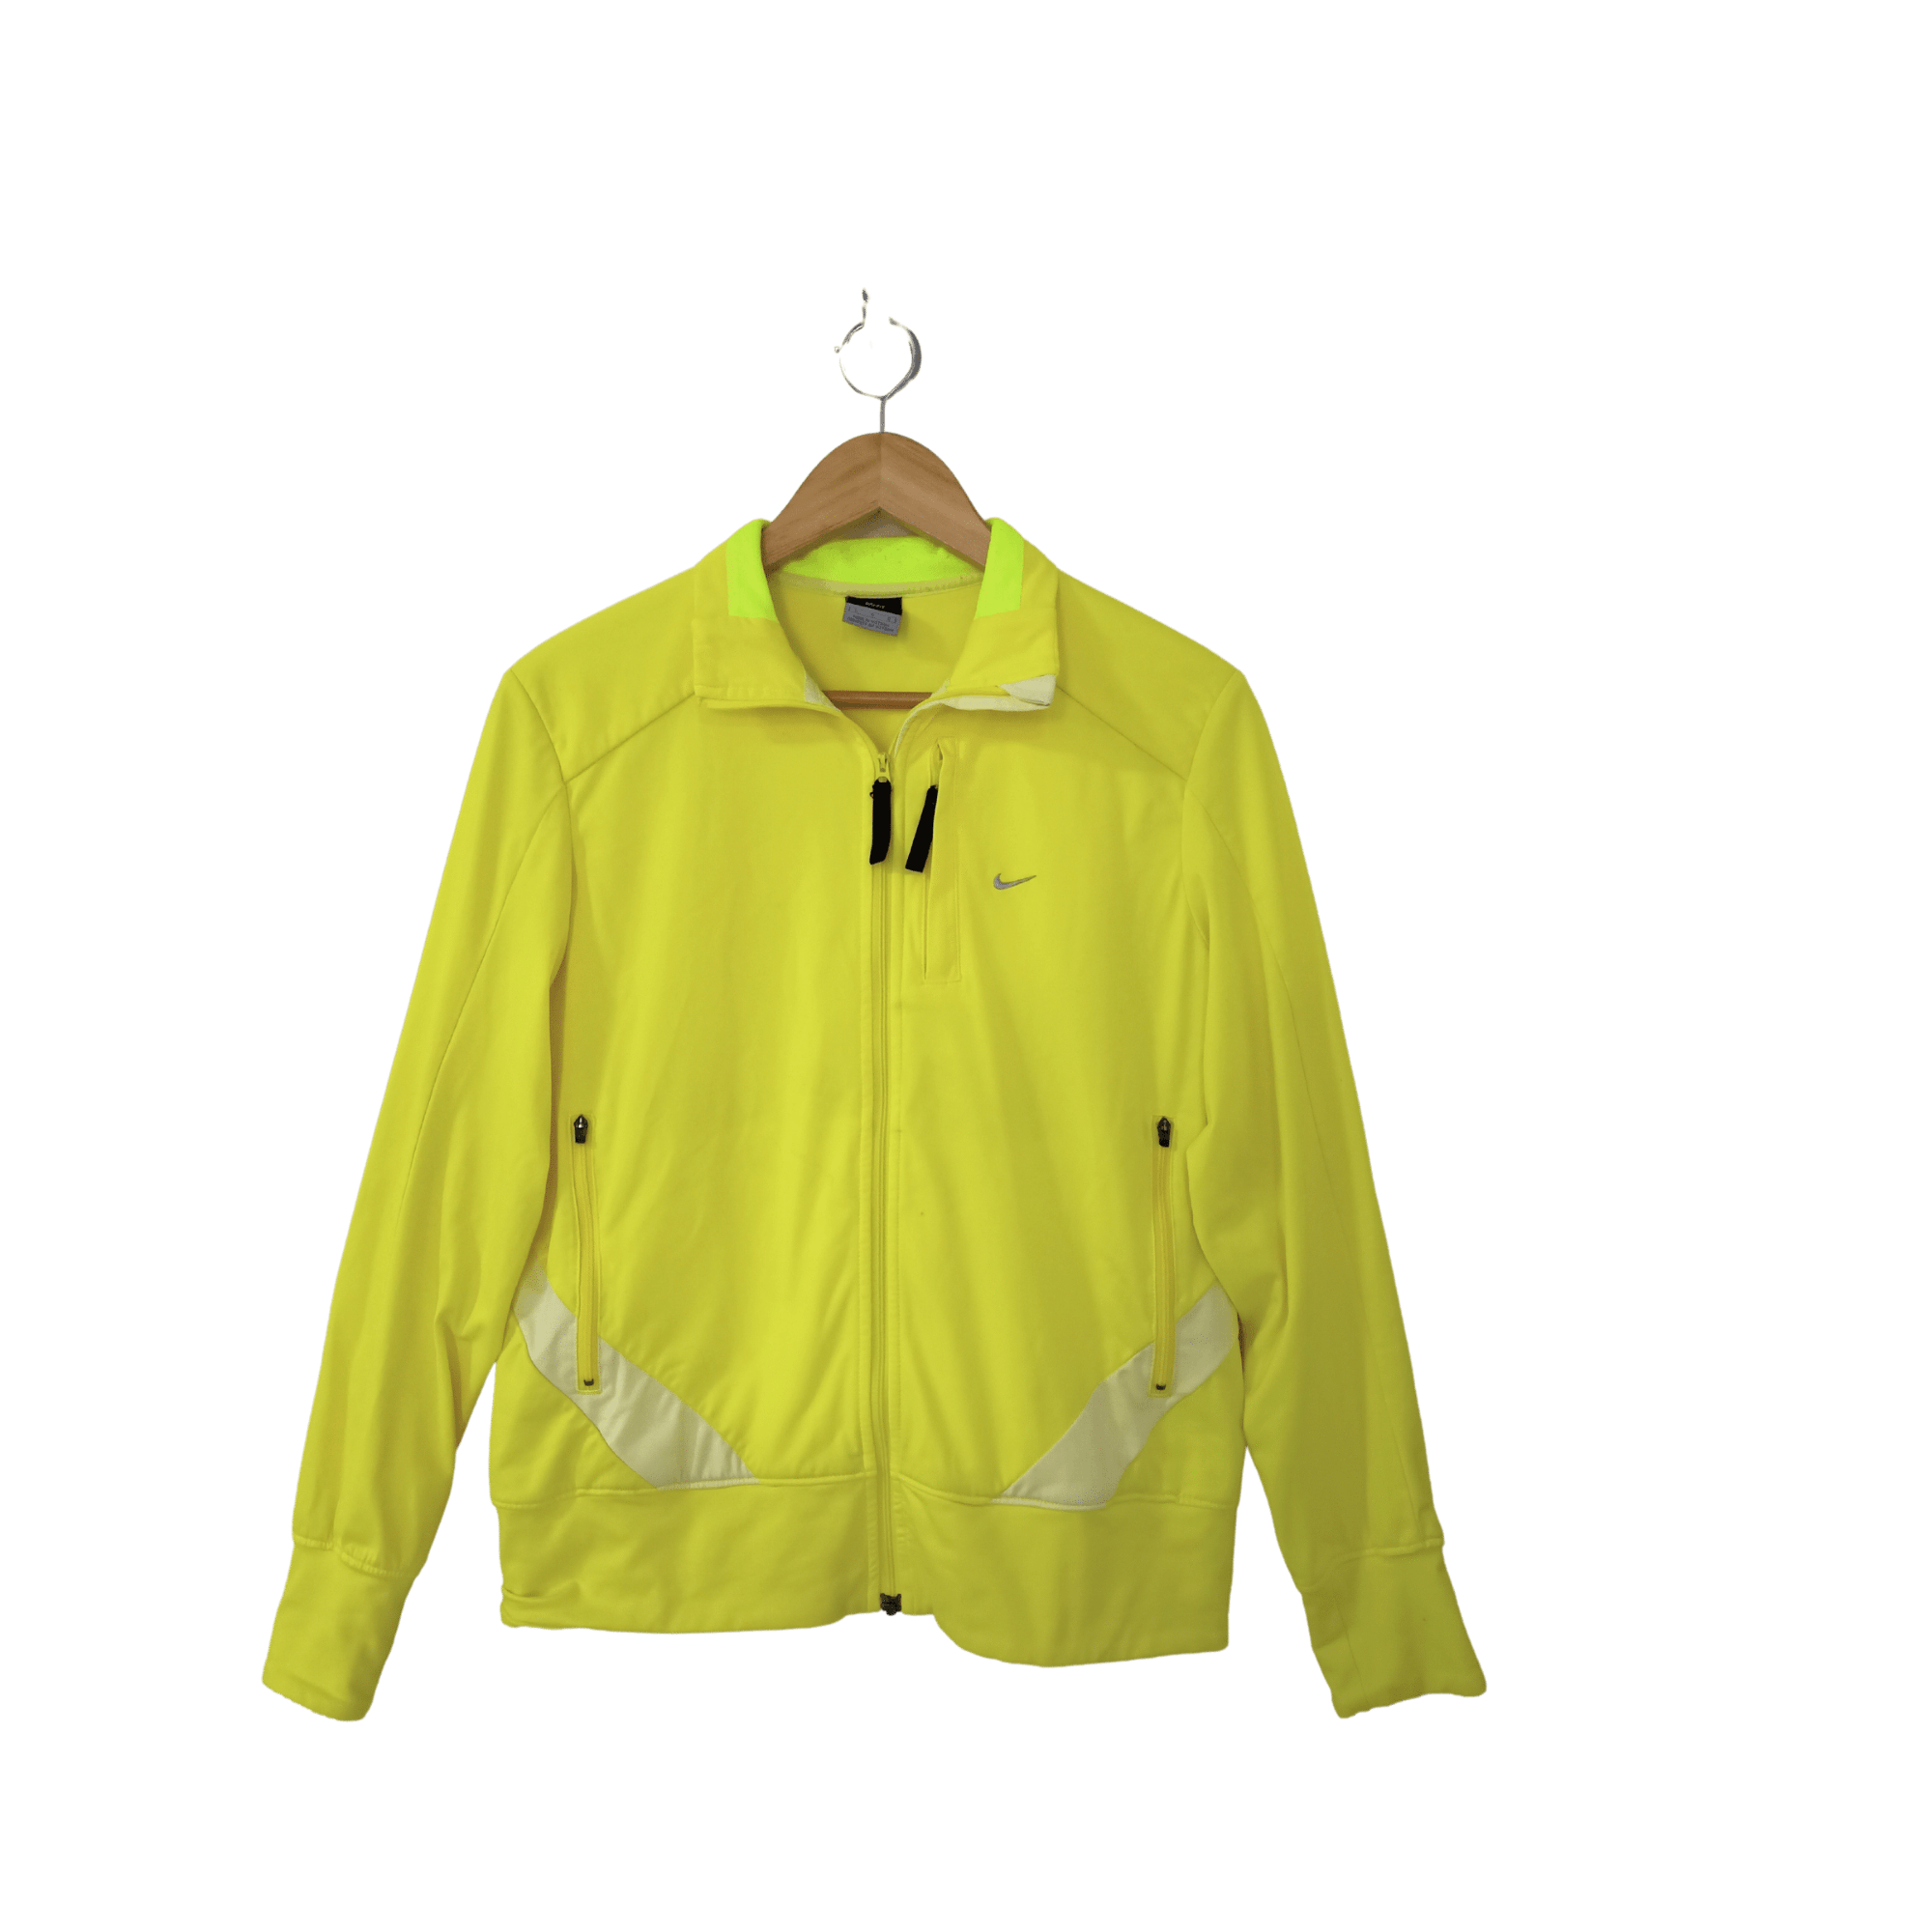 Nike Dri-fit Small Swoosh Embroidery Yellow Neon Jacket - 1